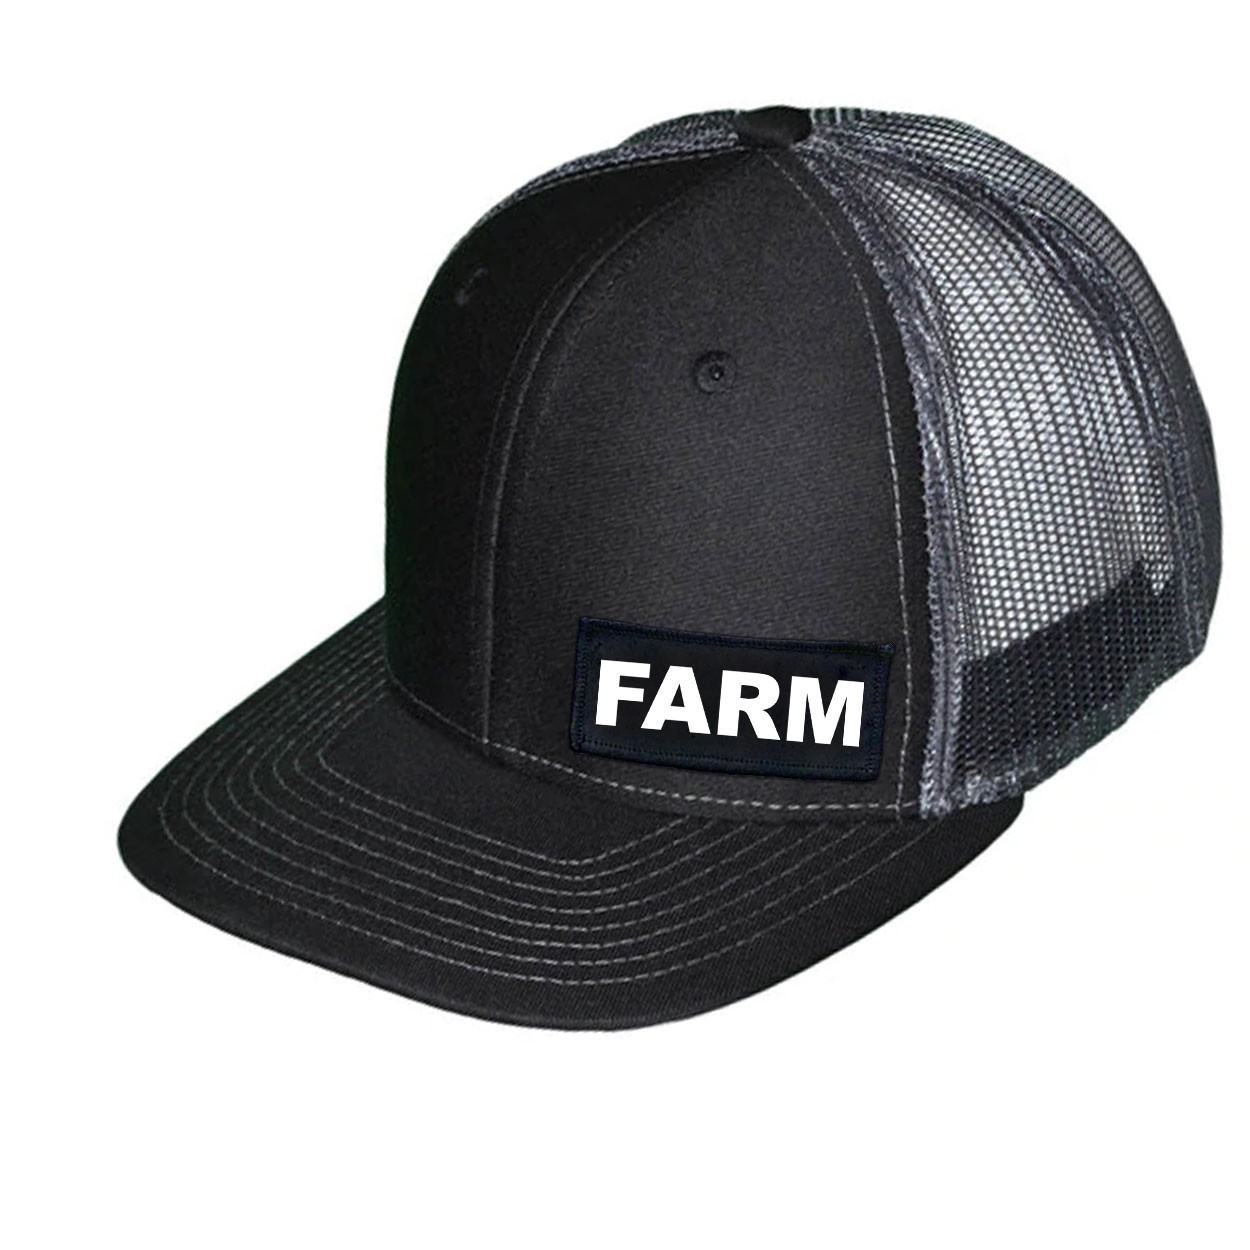 Farm Brand Logo Night Out Woven Patch Snapback Trucker Hat Black/Dark Gray (White Logo)